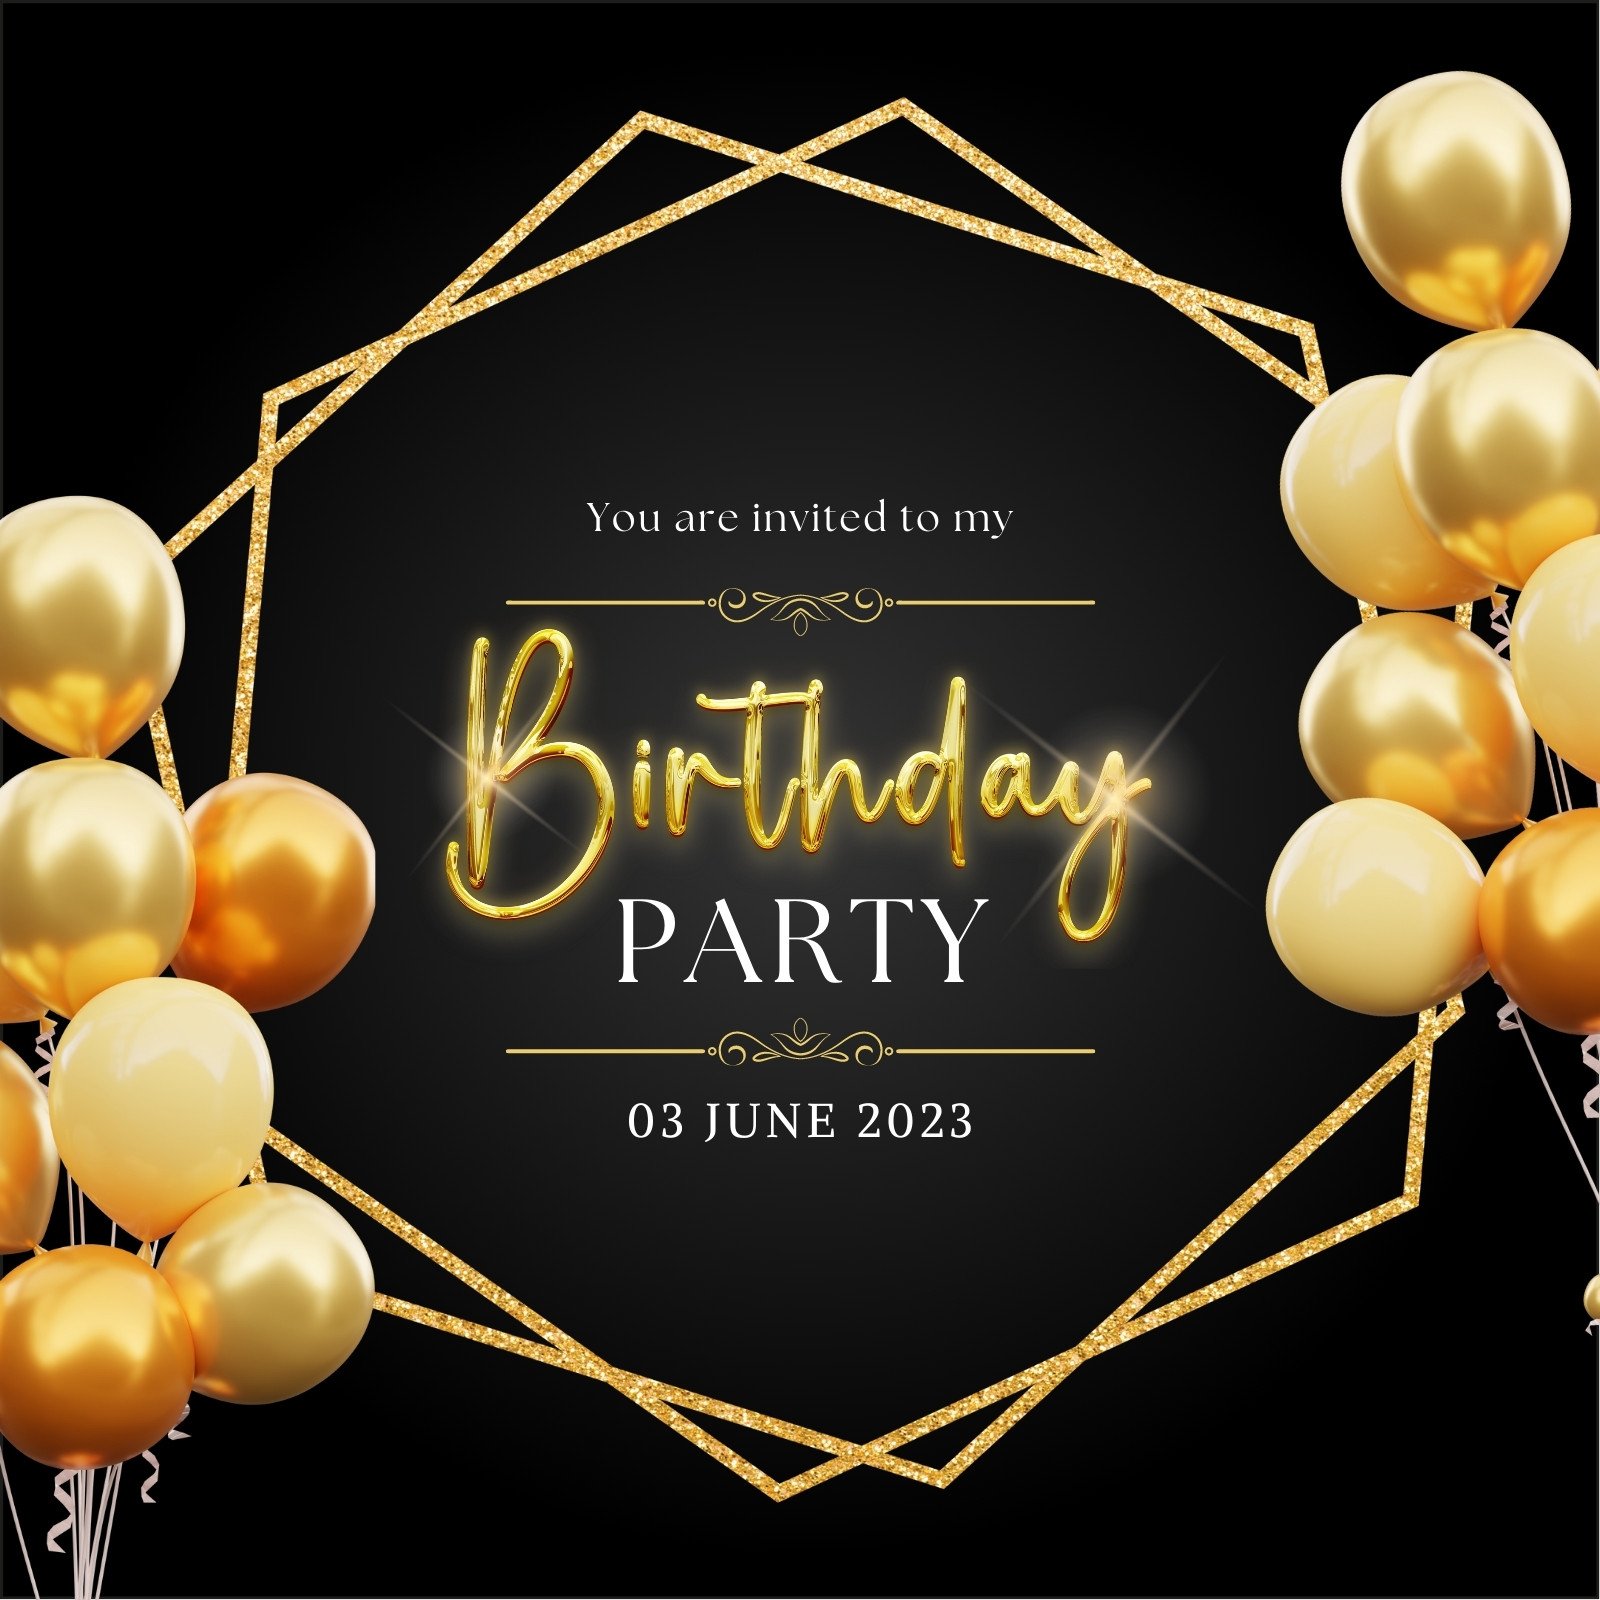 7 Elegant Birthday Invitation Templates For Your Kids Upcoming Birthday   FREE Printable Birthday Invitation Templates  Bagvania